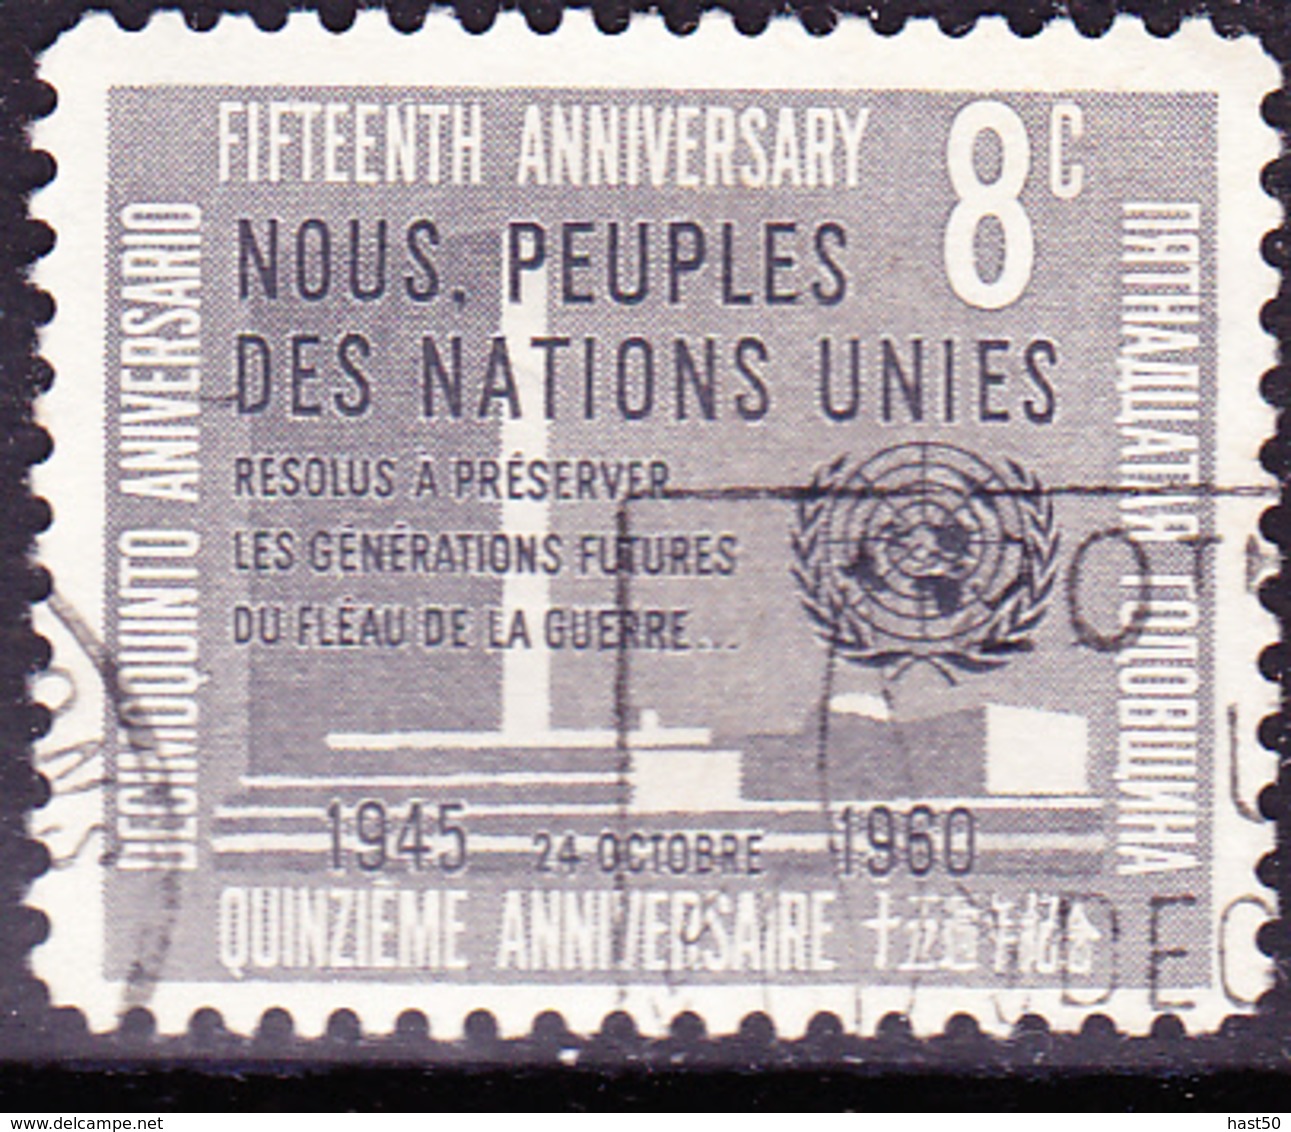 UN New York - 15 Jahre Vereinte Nationen (Mi.Nr.: 91) 1960 - Gest Used Obl - Usados